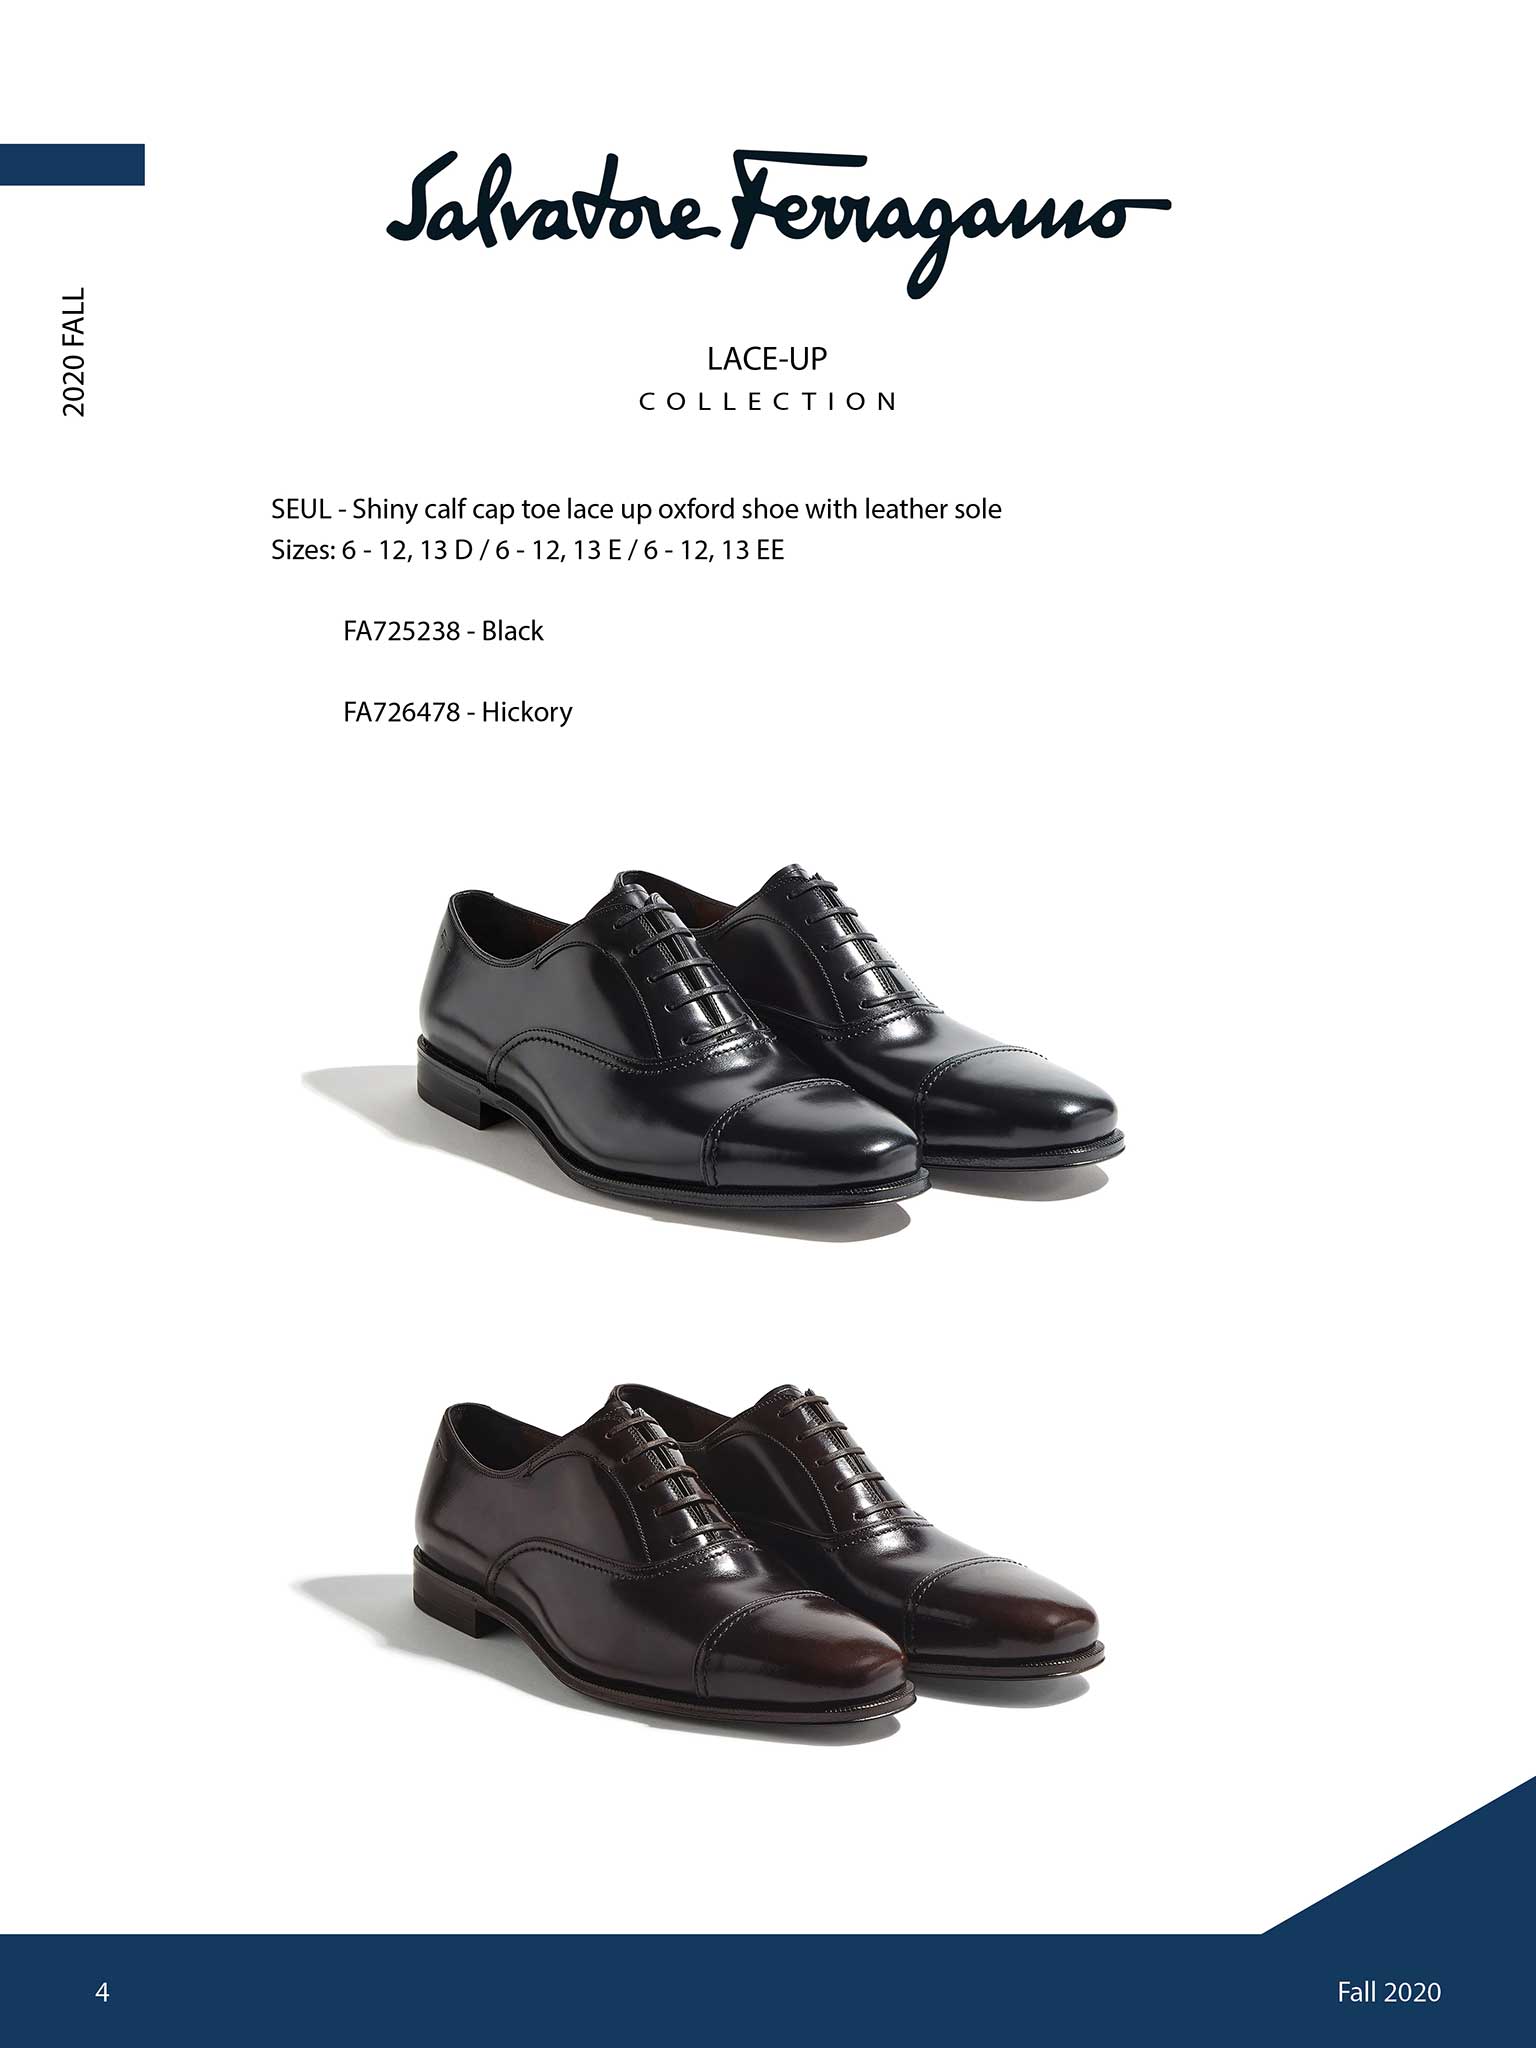 Ferragamo Shoes & Belts                                                                                                                                                                                                                                   , Seul  by Salvatore Ferragamo